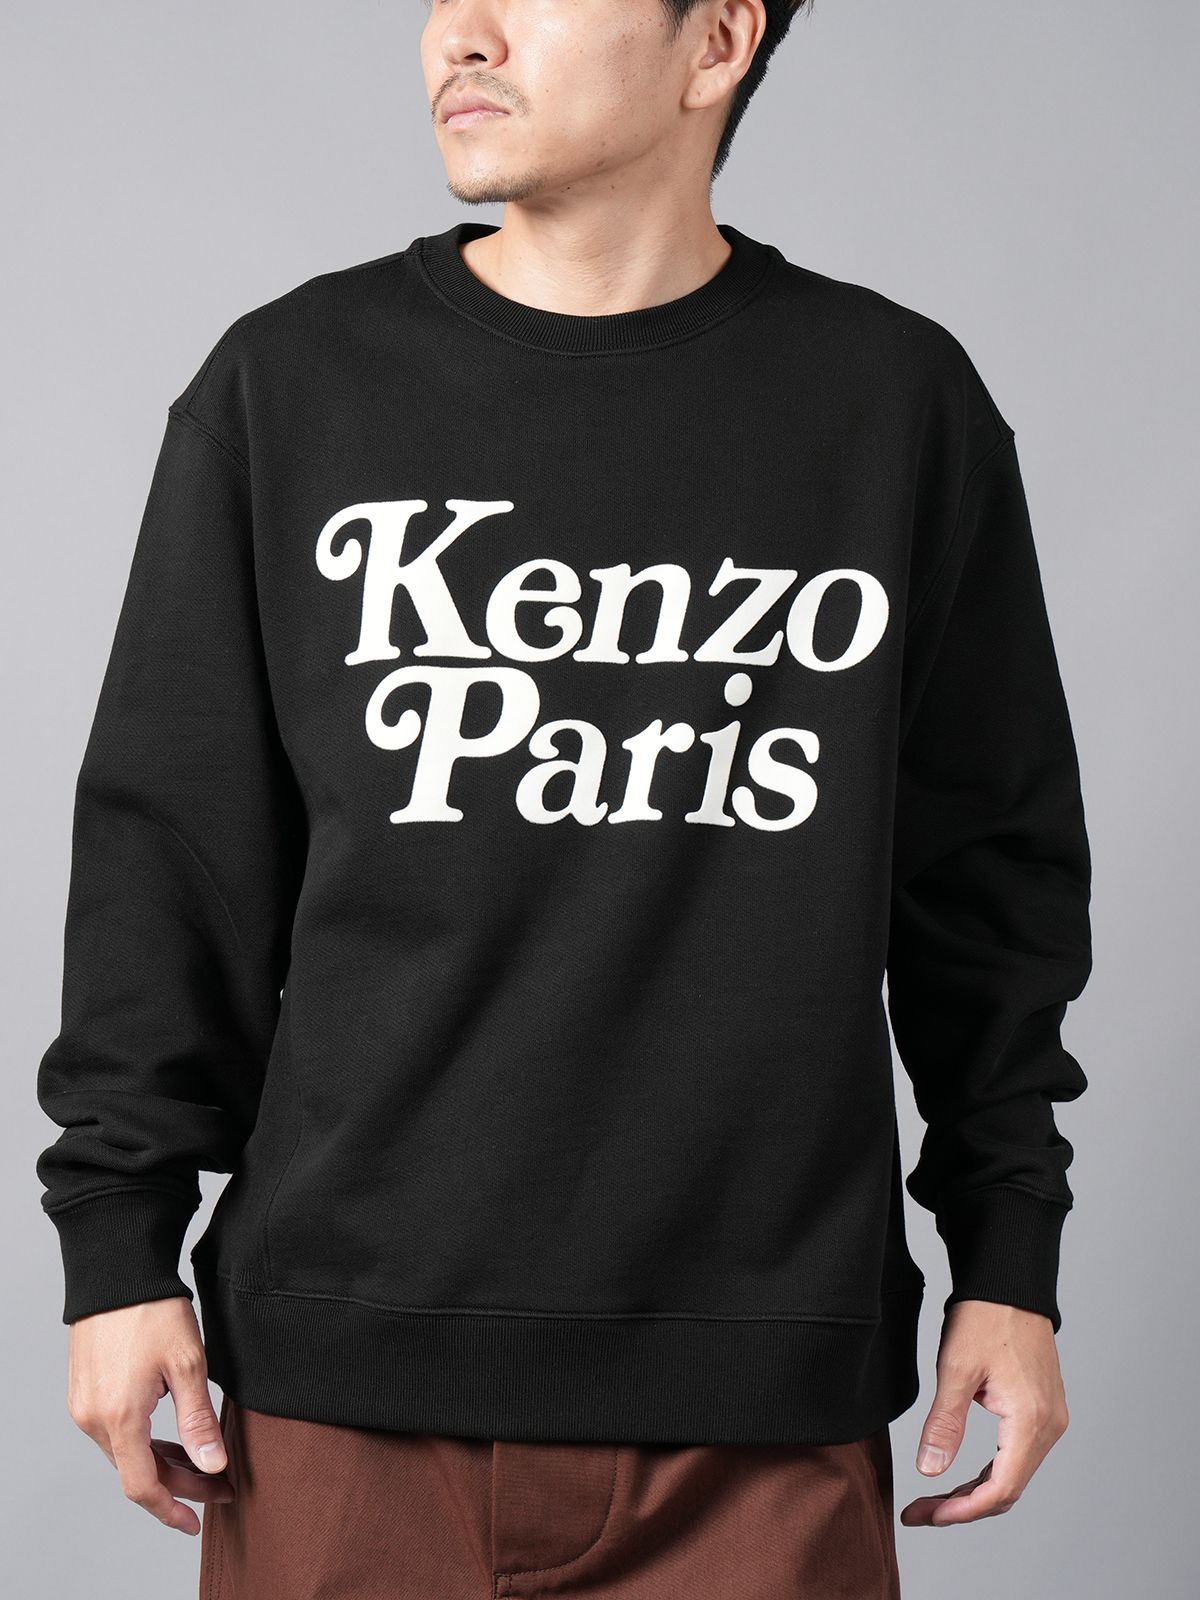 KENZO - 【残りわずか】【限定】 KENZO x VERDY / KENZO BY